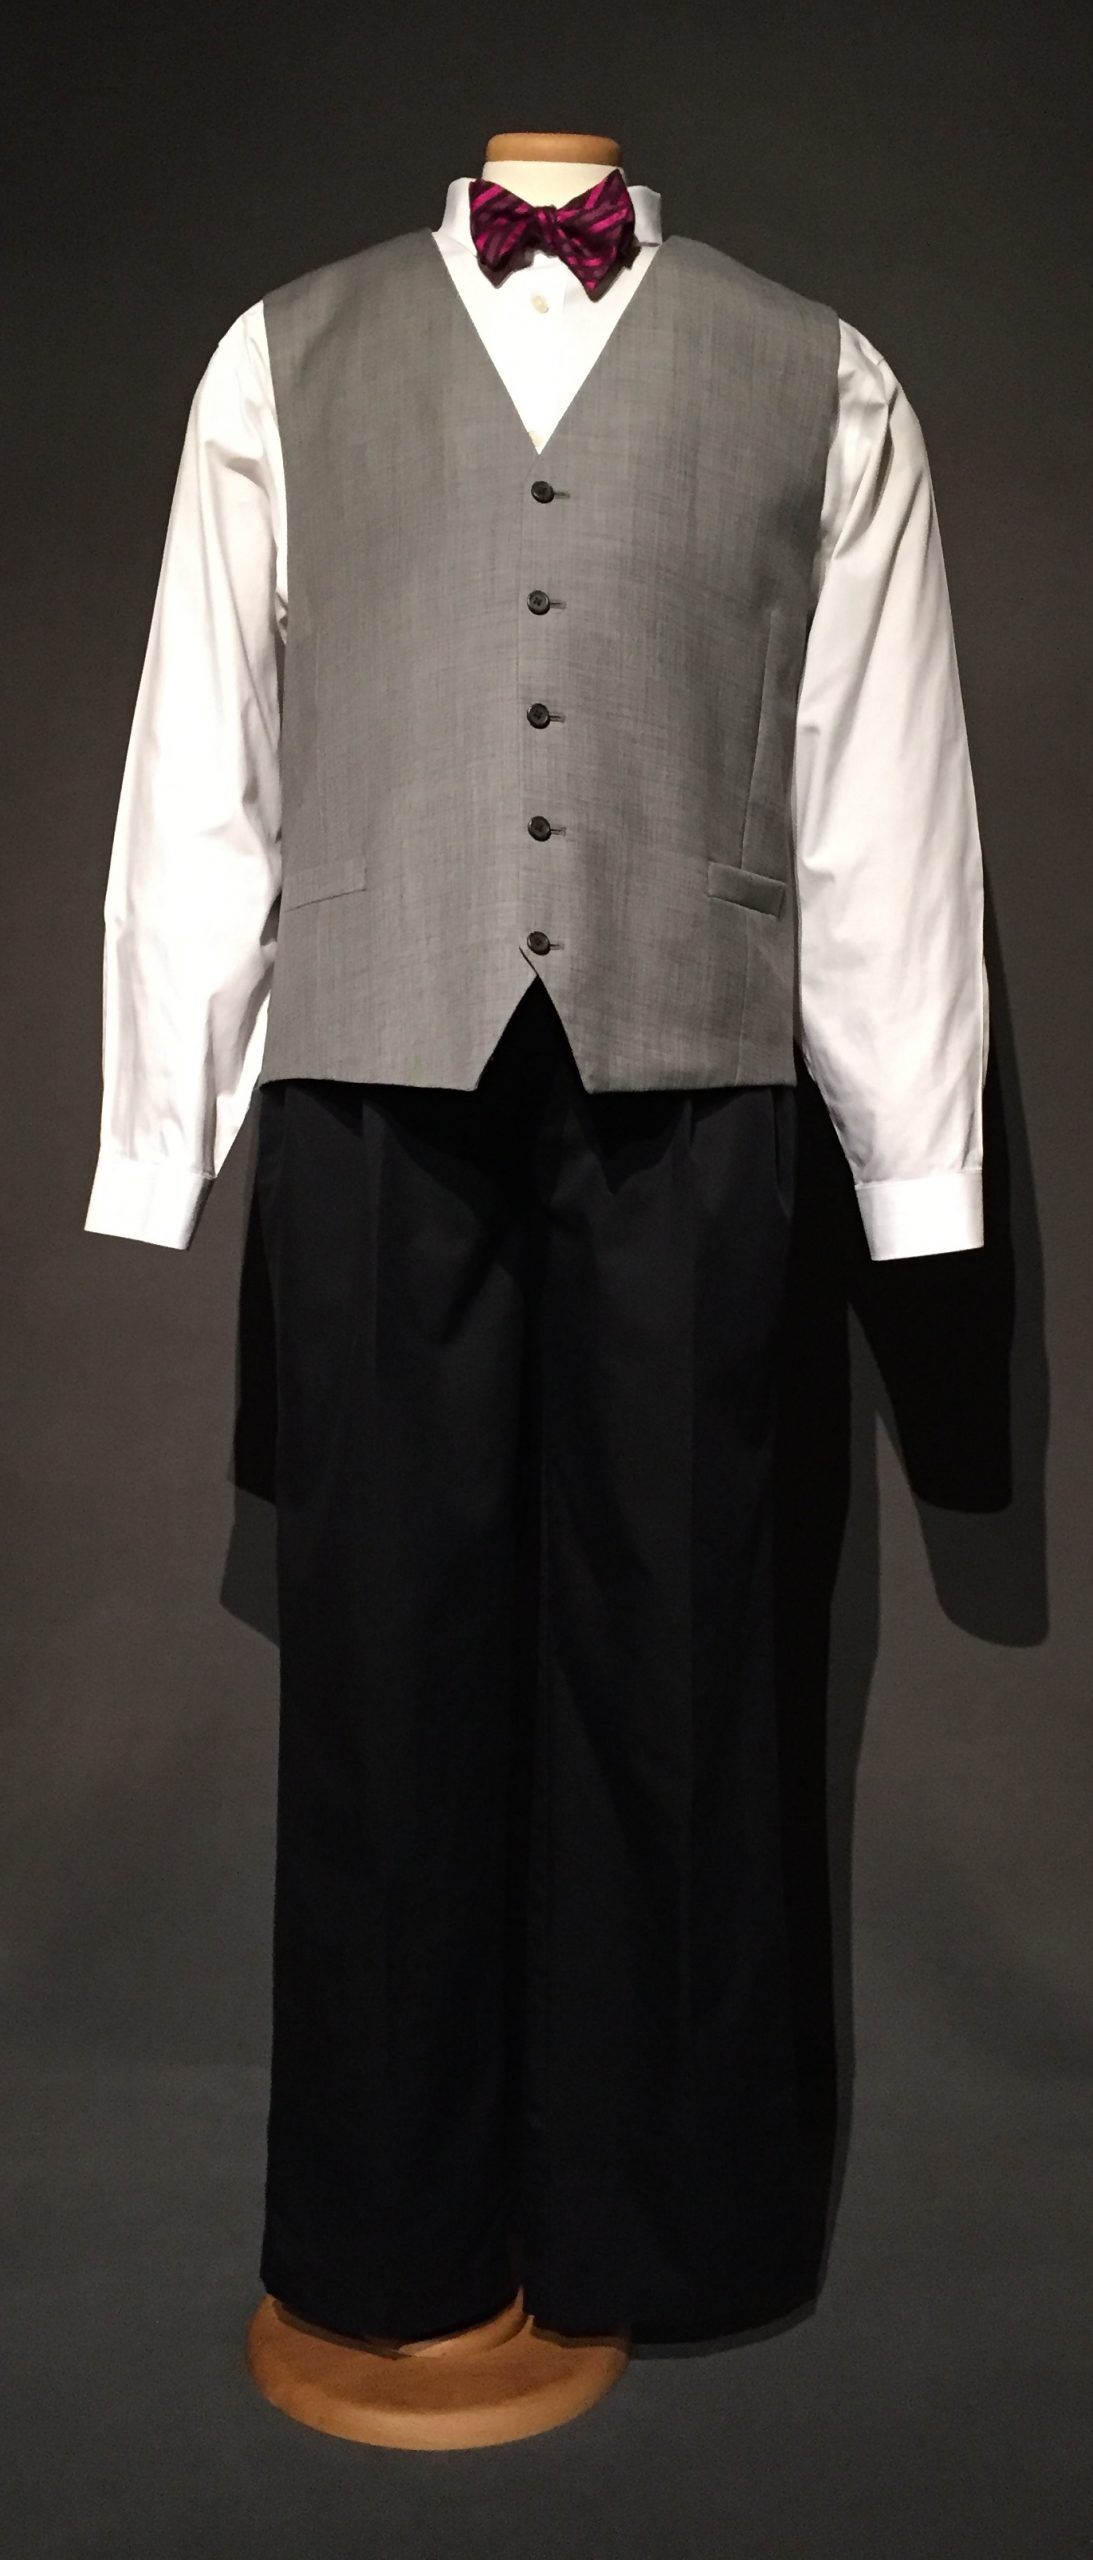 White button down, pink bowtie, grey vest, blue pleated front pant